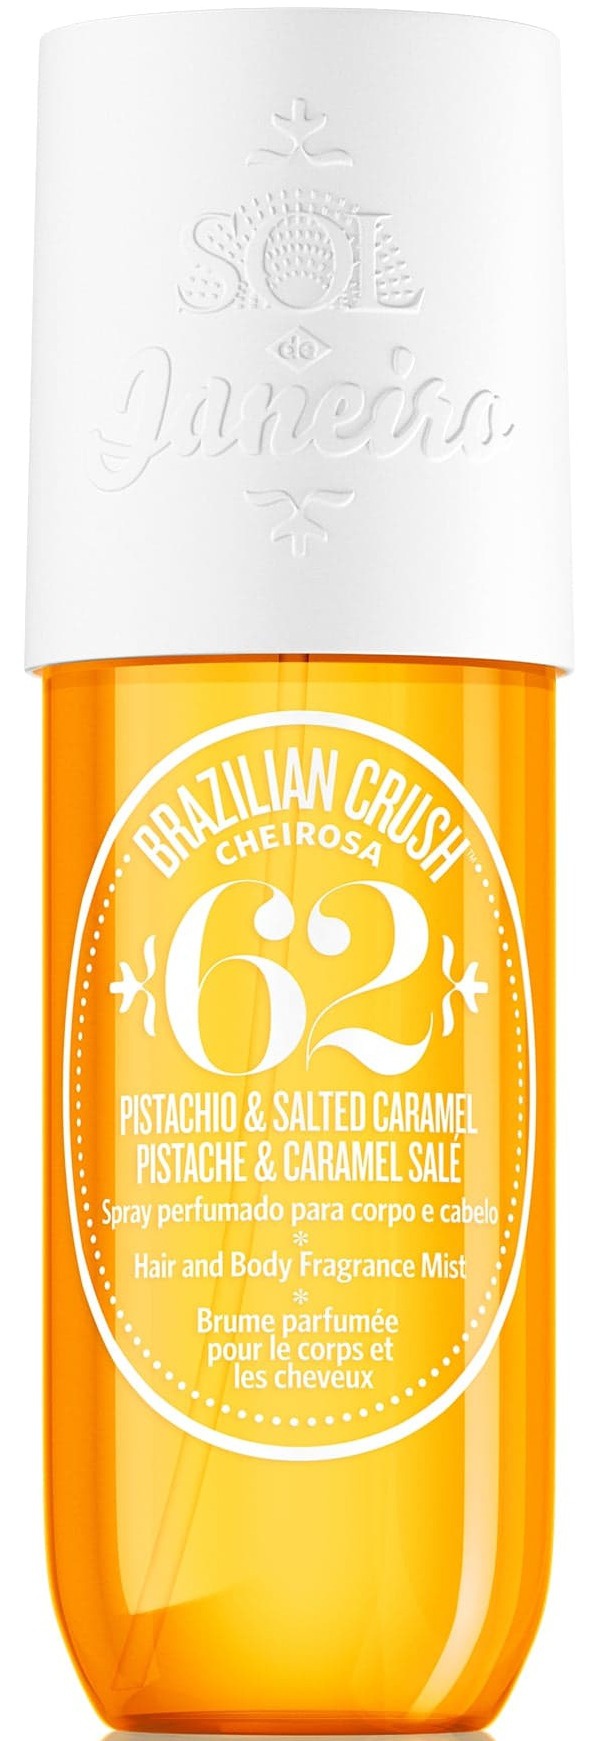 Sol de Janeiro Brazilian Crush Cheirosa 62 Perfume Mist